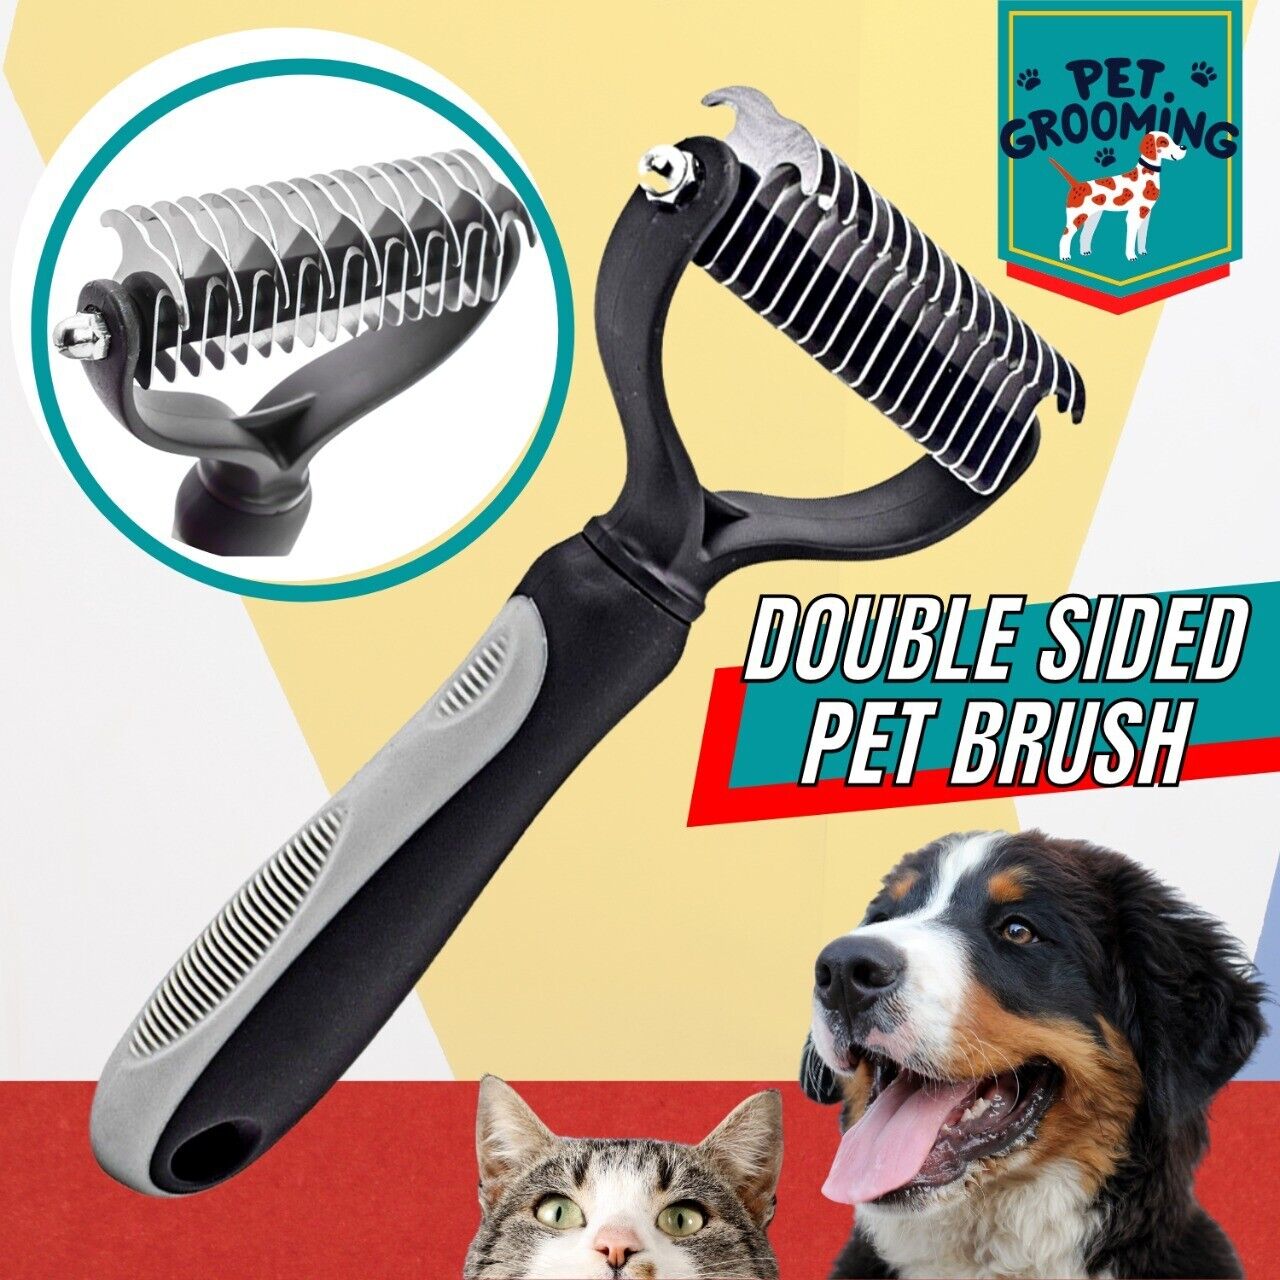 Professional Pet Grooming Tool